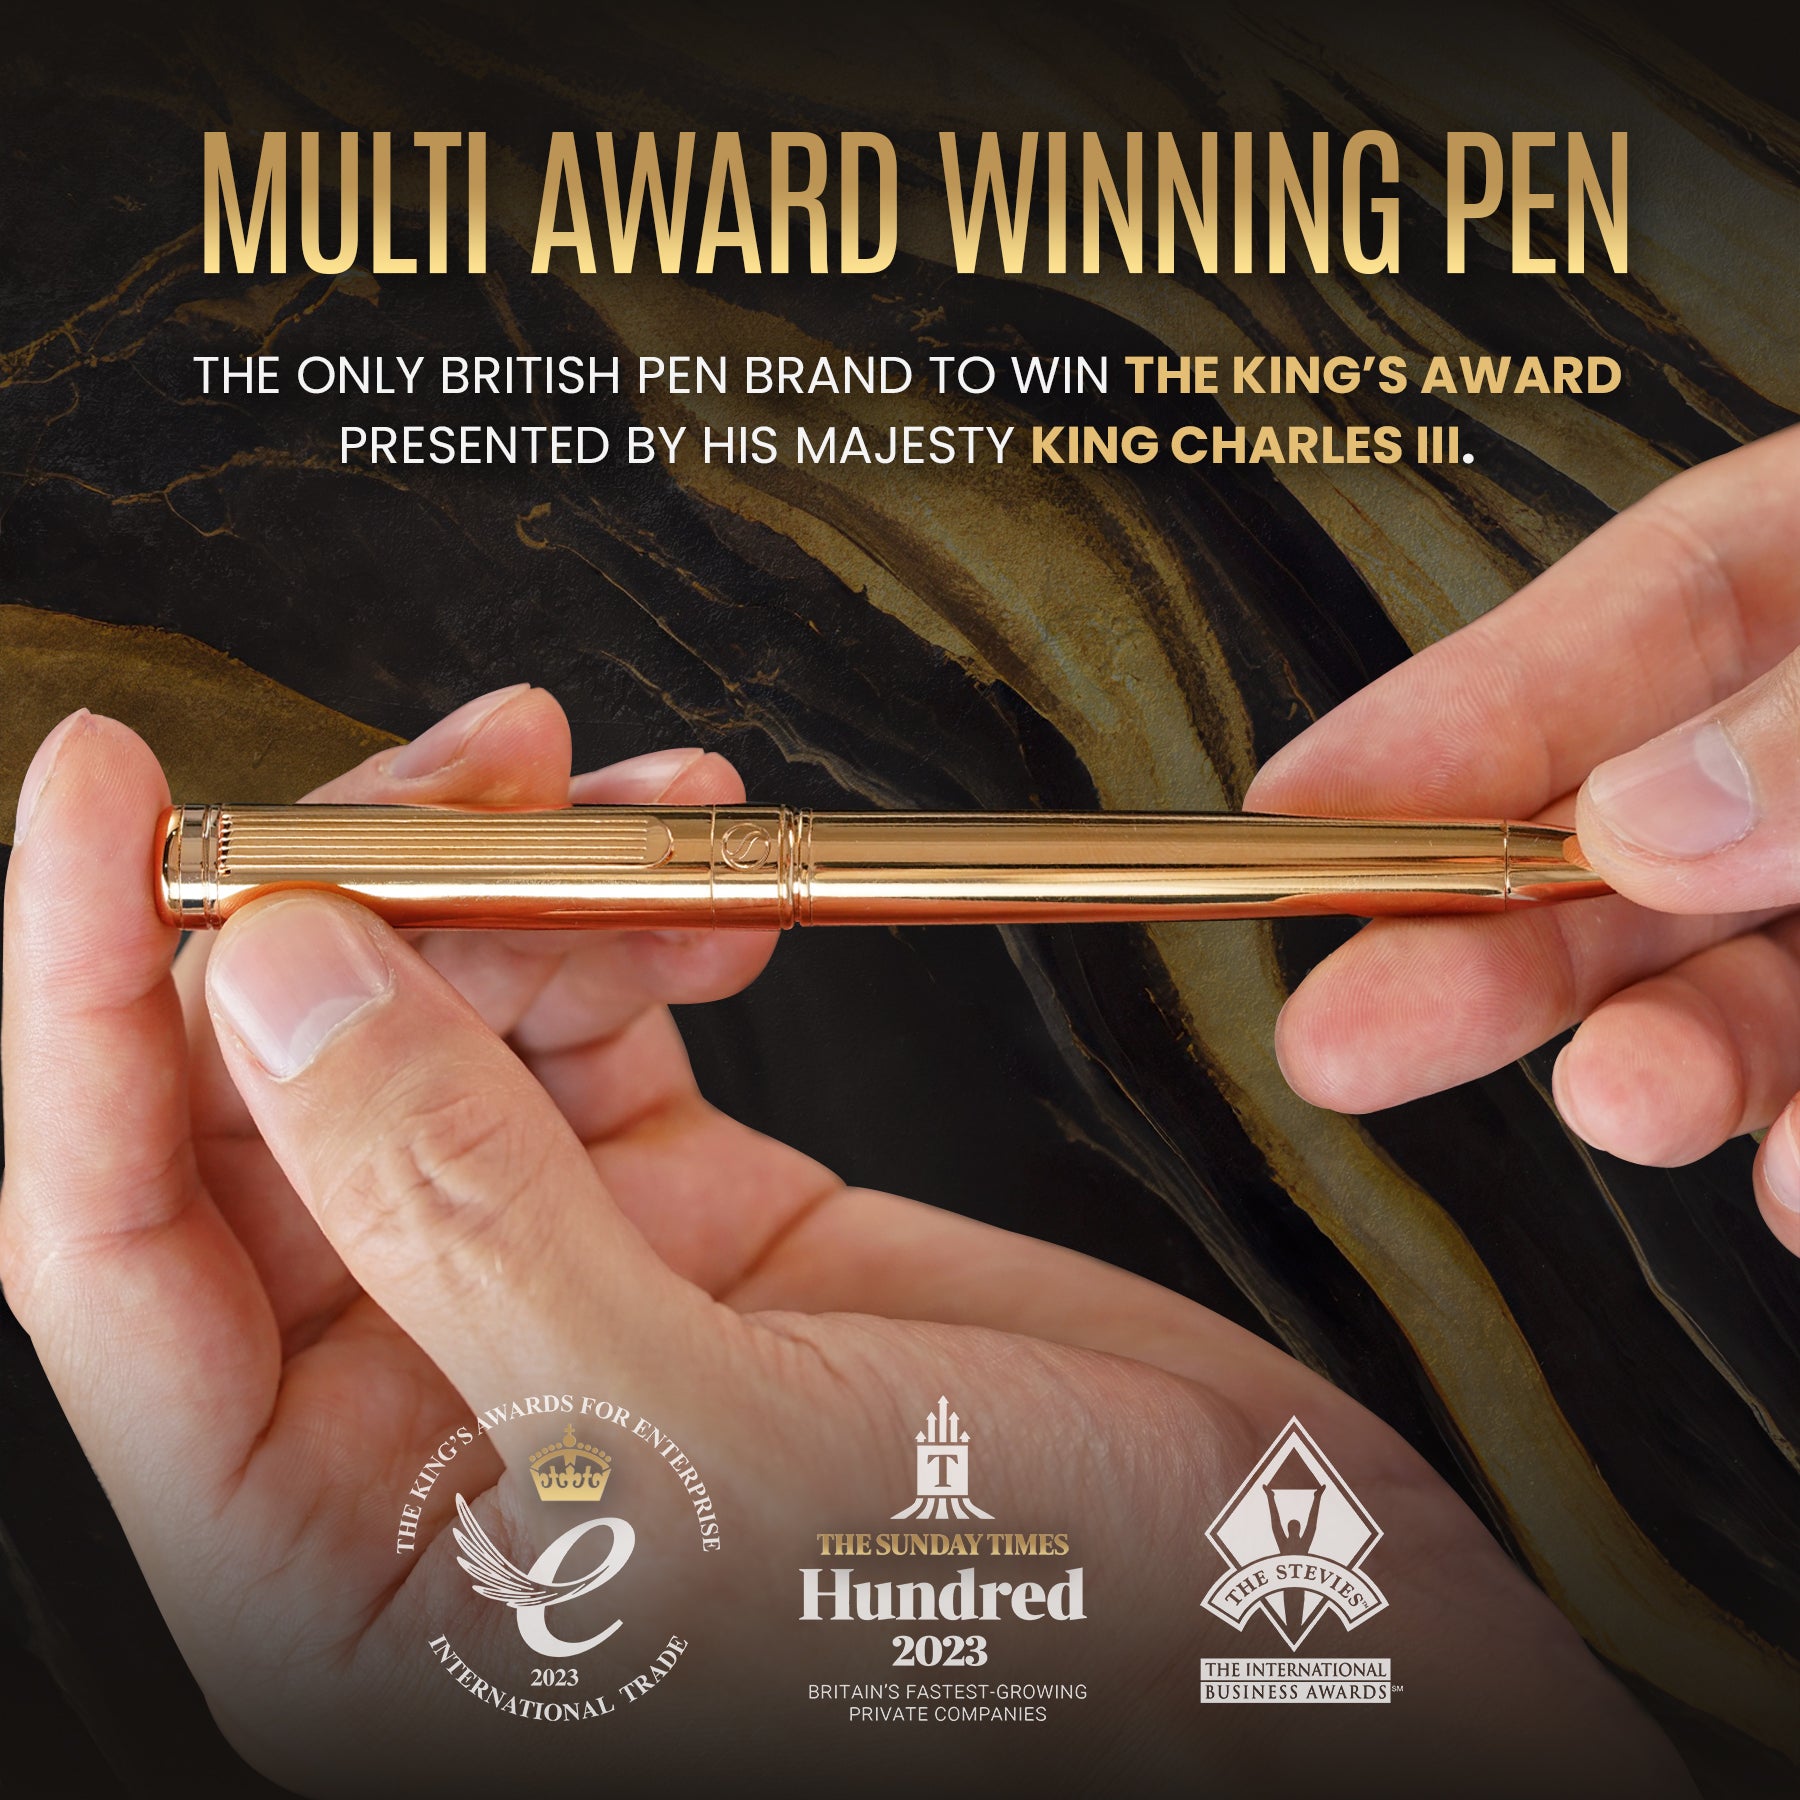 Scriveiner Classic Gold ballpoint Pen